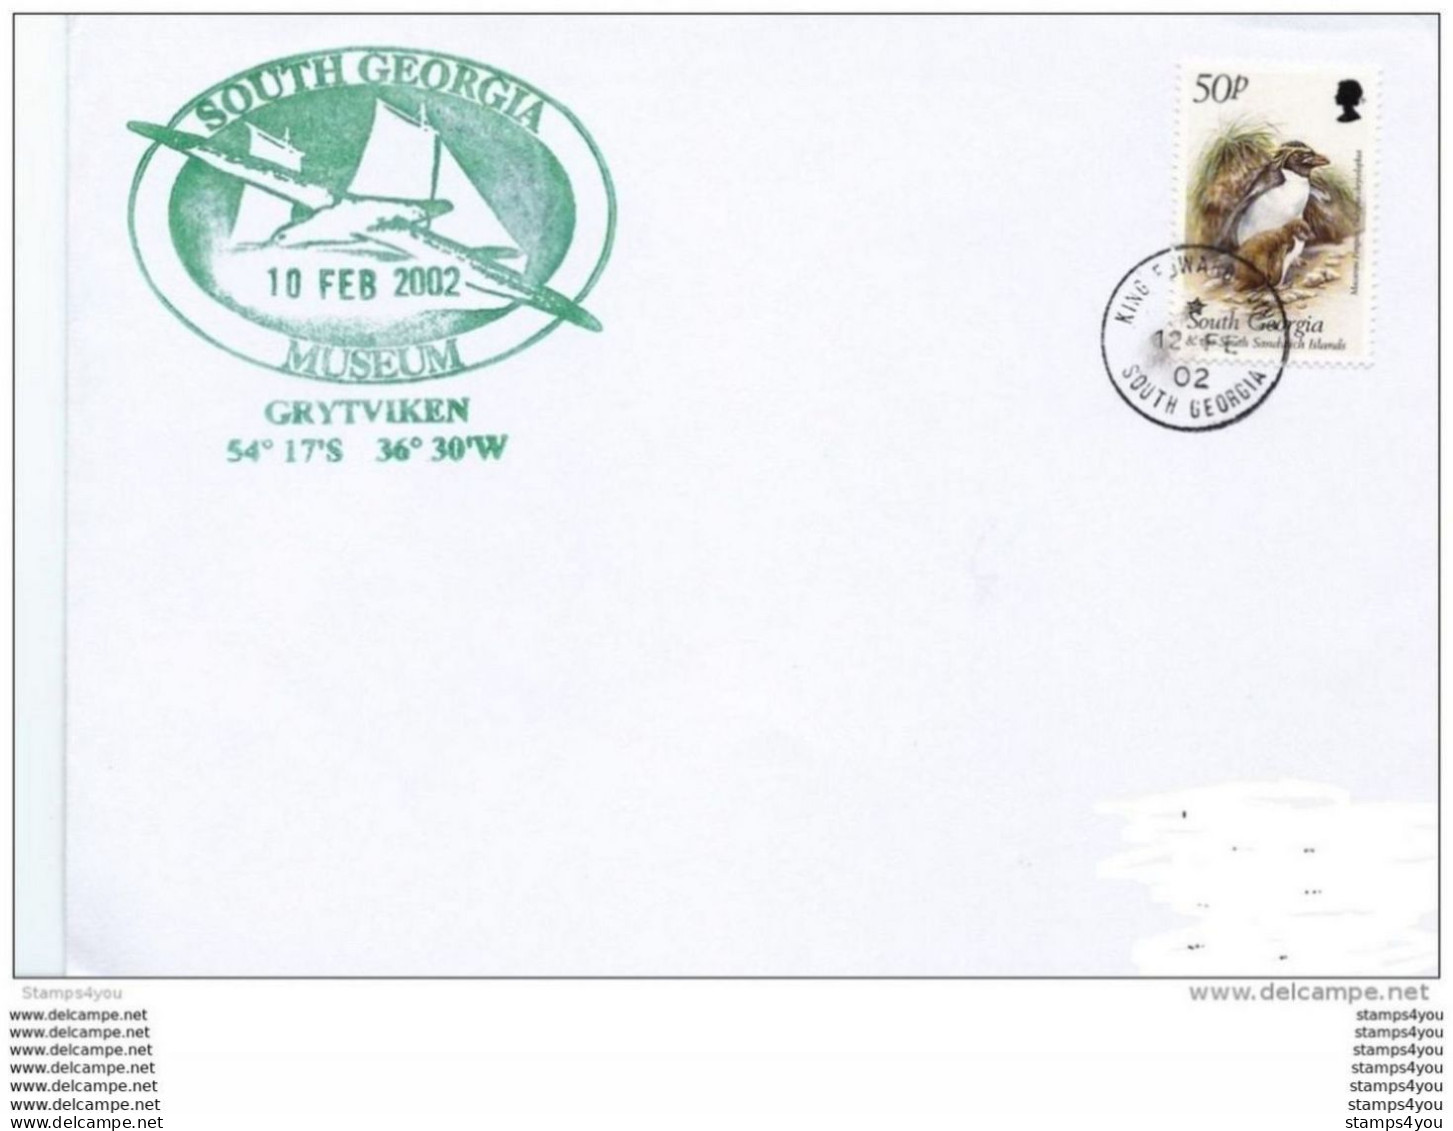 101 - 6 - Enveloppe De Géorgie Du Sud - Musée De Grytviken 2002 - Zuid-Georgia